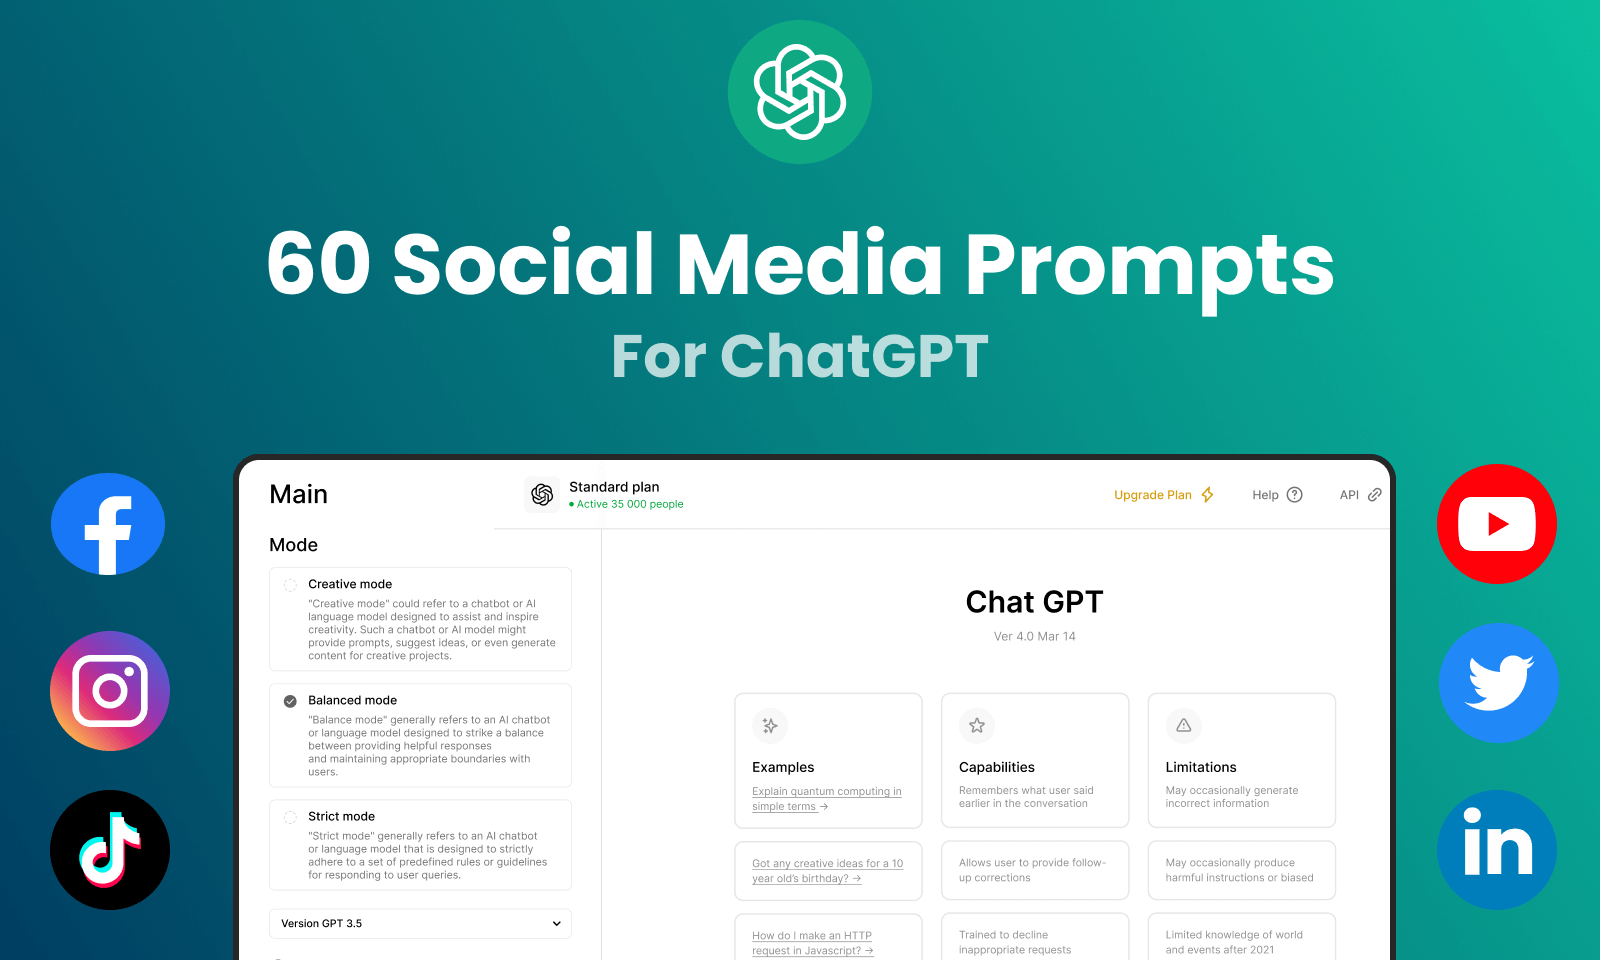 1000+ AI & ChatGPT Prompts for Social Media Post Generation - SocialBee